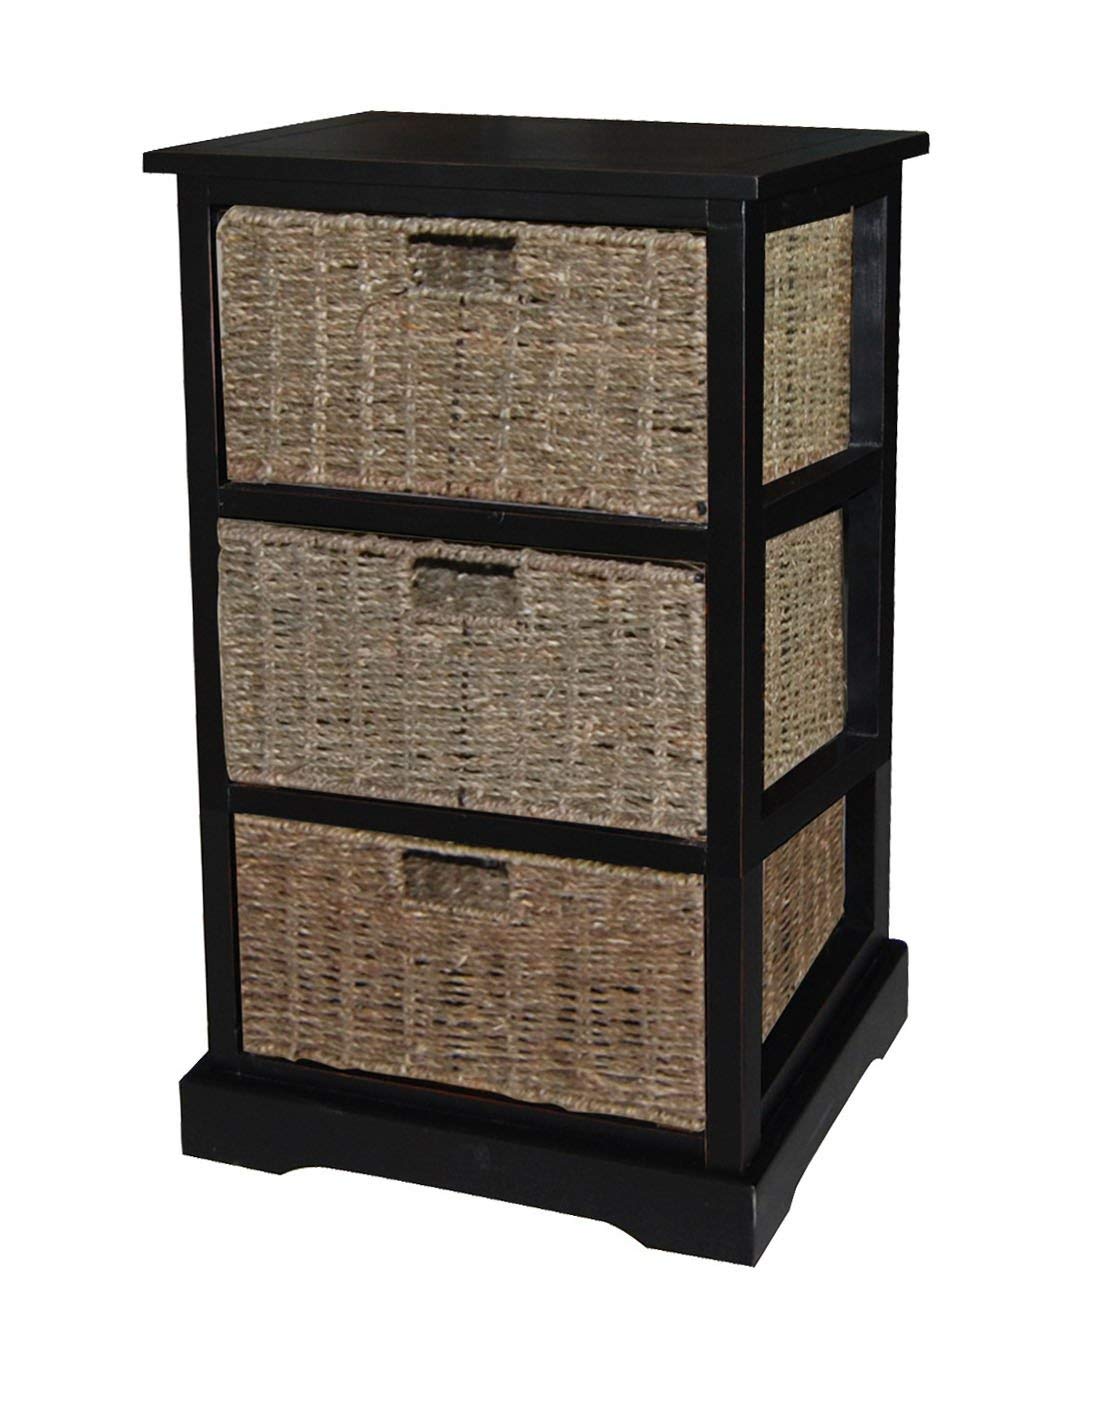 Urbanest 1000479 Accent Storage Cabinet With Three Seagrass Basket